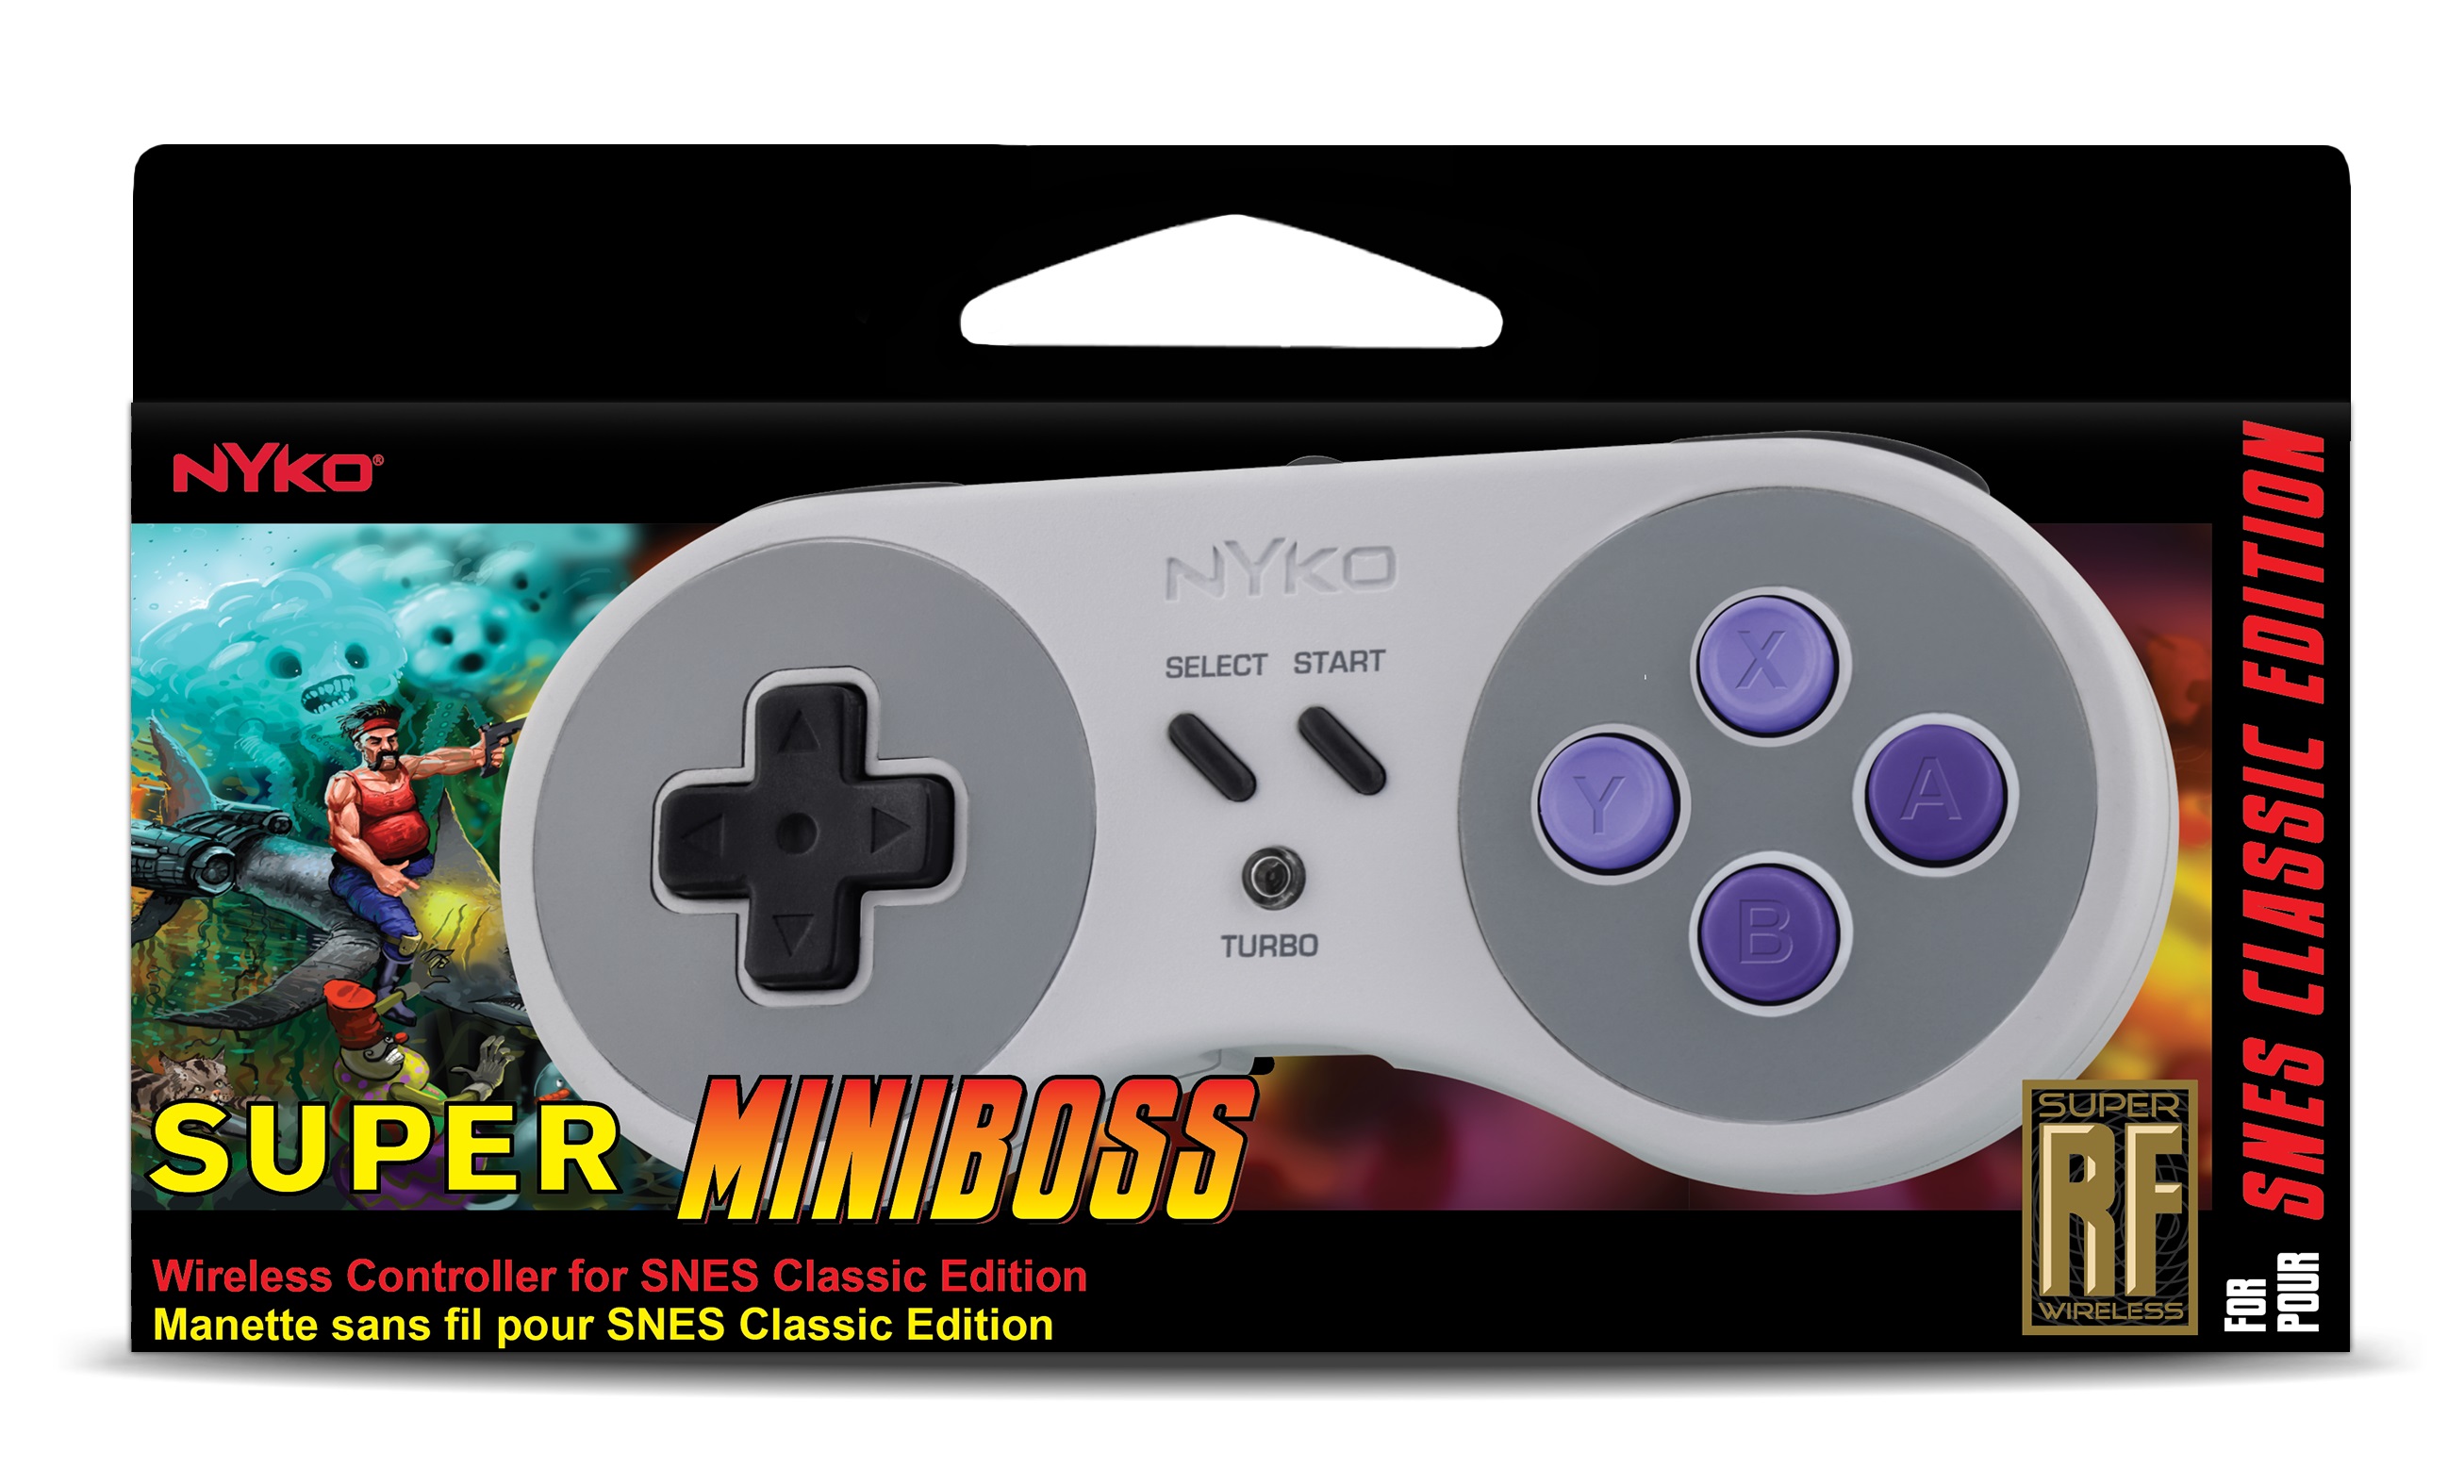 Super wireless. Super NES Classic Edition. Джойстик Snes рисунок. Miniboss игра. Игры на 2.4 Wireless Controller номер супер Марио.